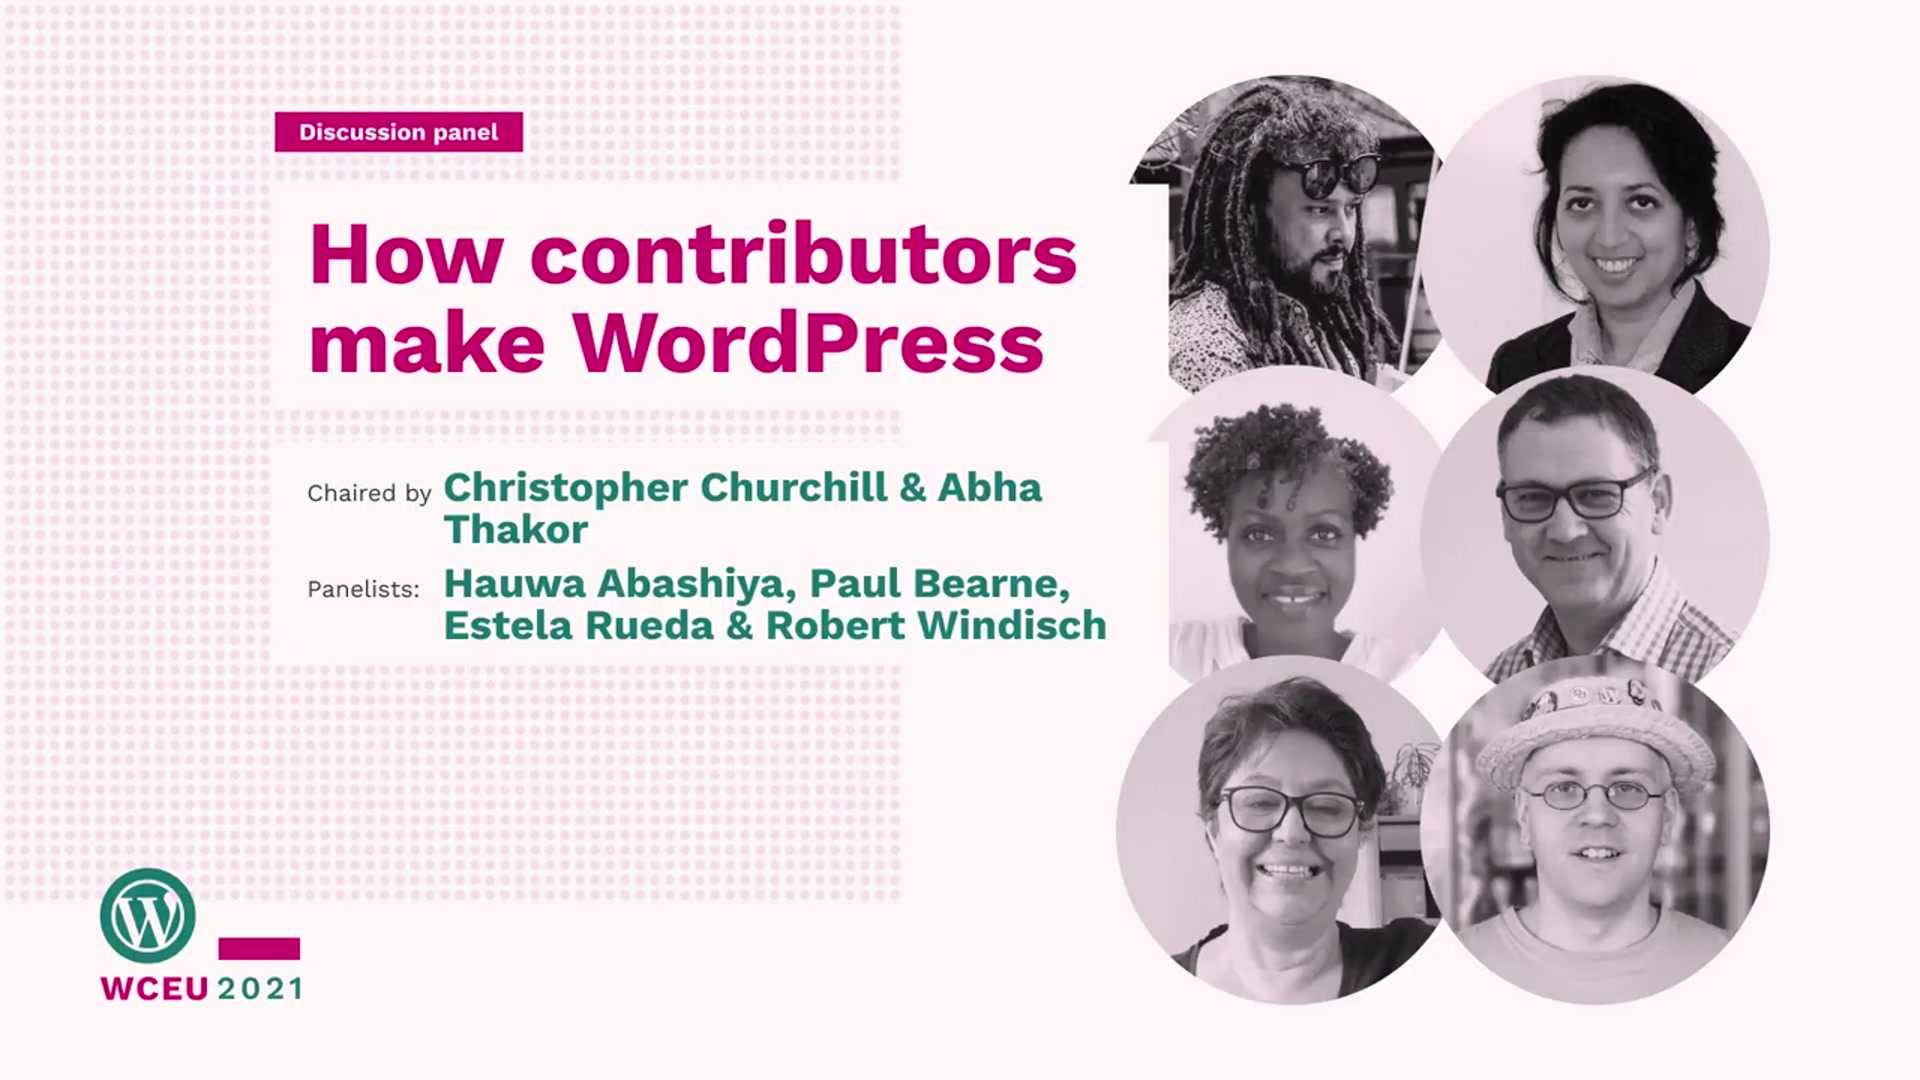 Christopher Churchill, Abha Thakor: How contributors make WordPress